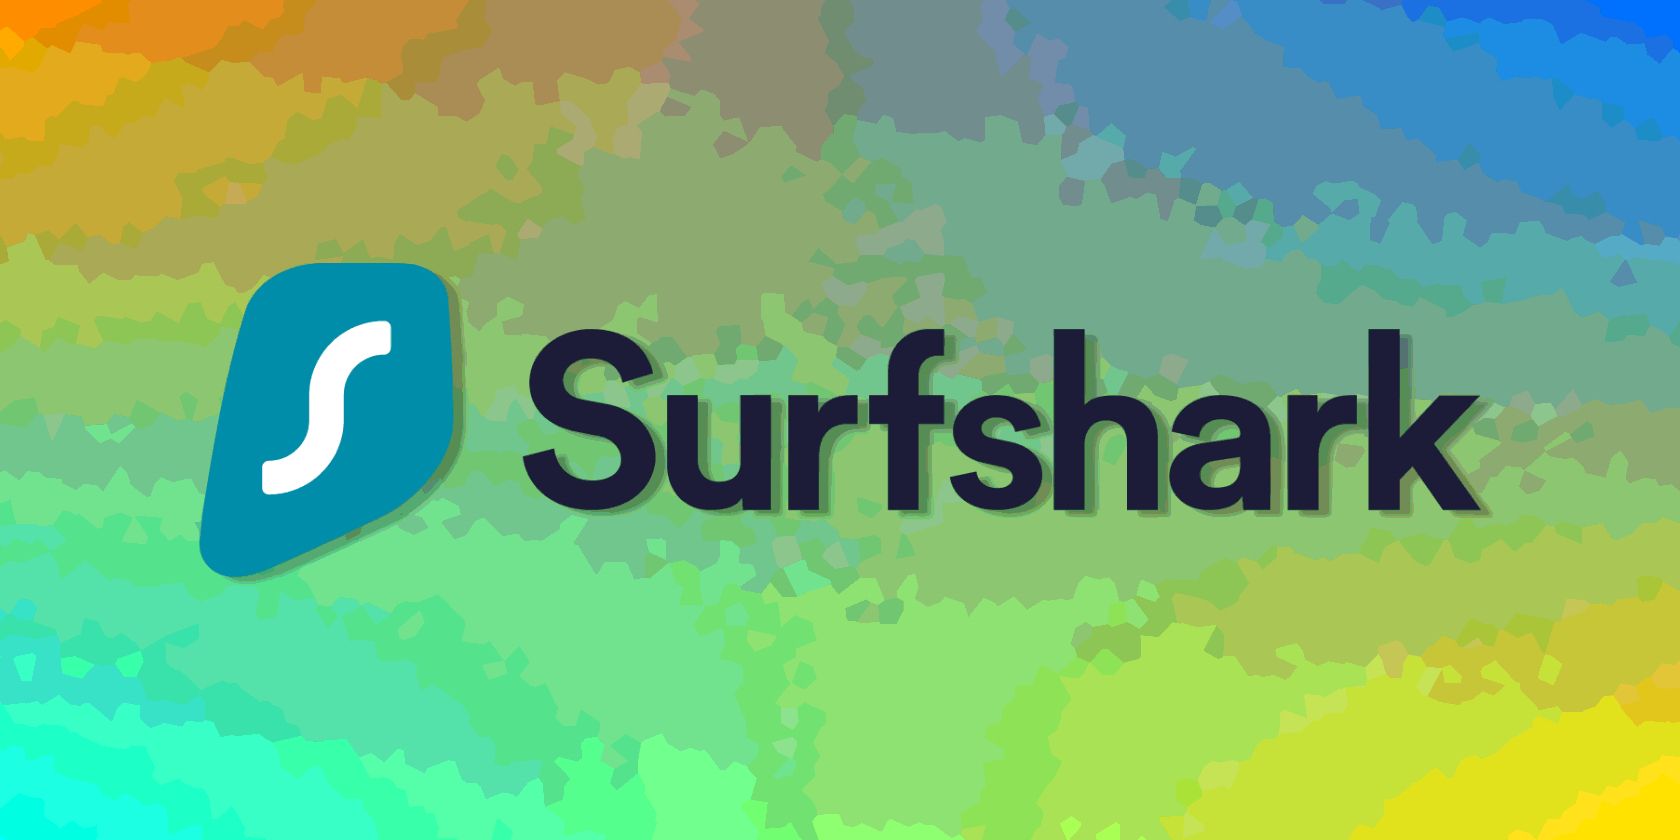 surfshark logo feature